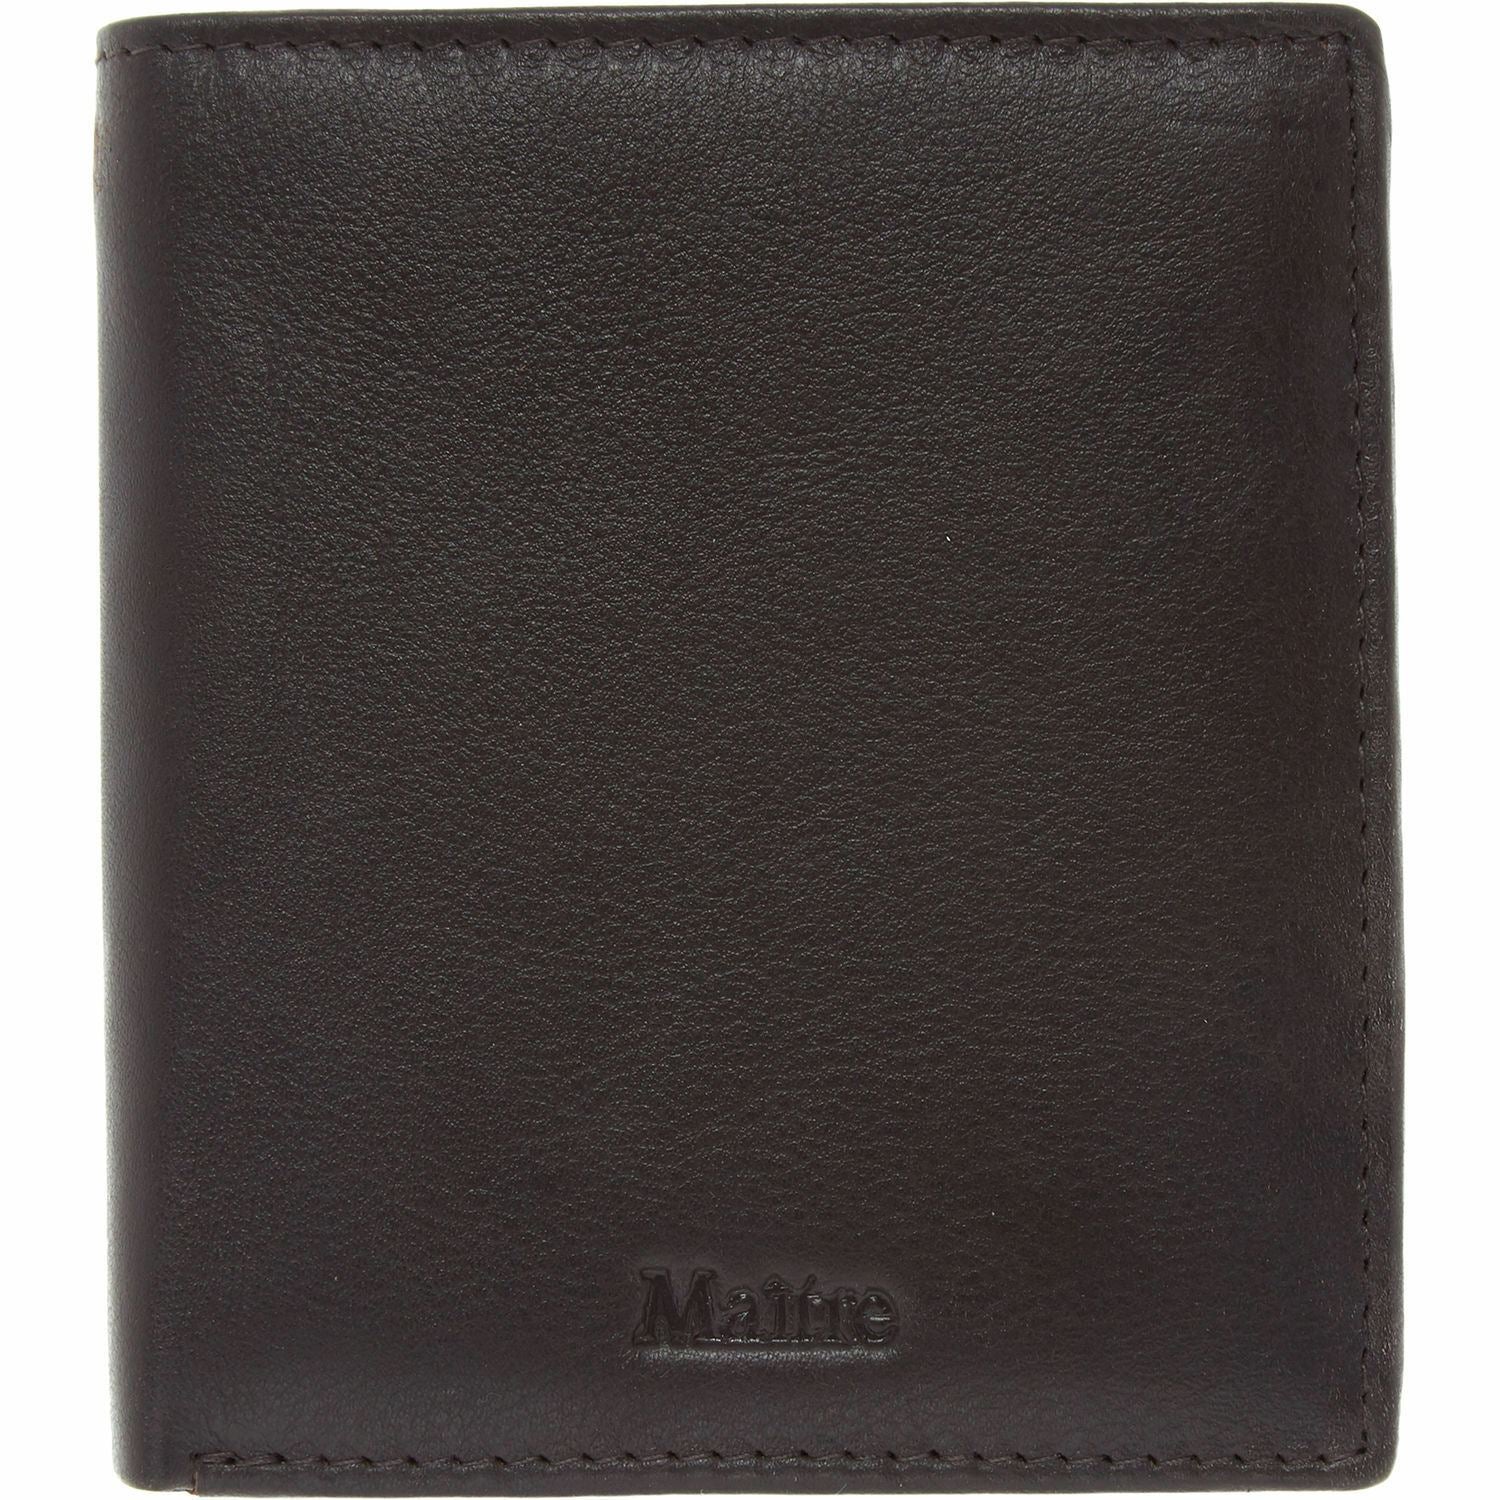 MAITRE Dark Brown Genuine Leather Bi-Fold Men's Wallet rrp Â£32